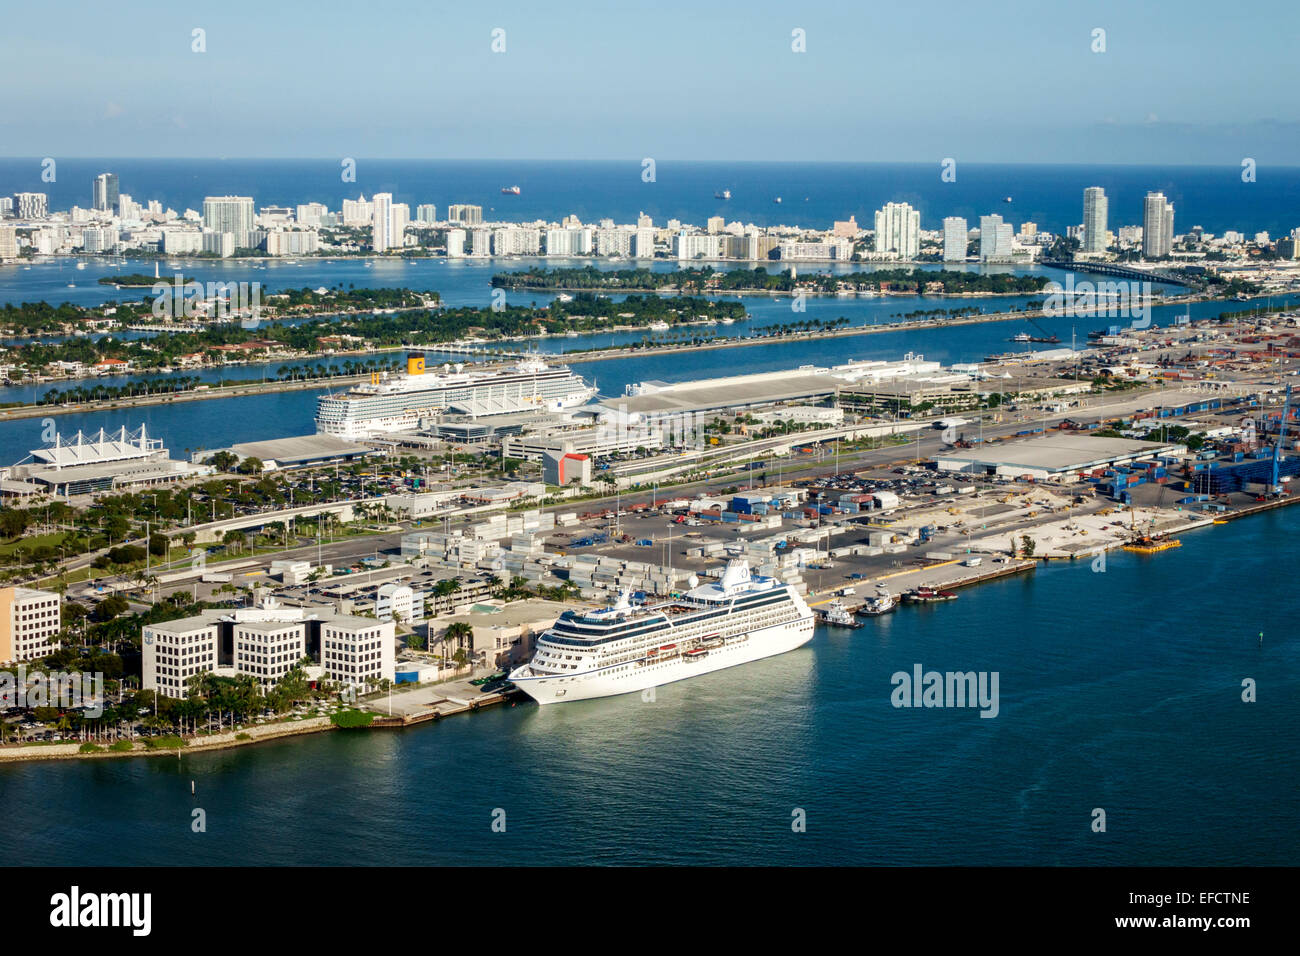 Miami Florida,Port,Biscayne Bay,cruise ship,Miami Beach,Atlantic Ocean,aerial overhead view from above,MacArthur Causeway,view through window,FL150106 Stock Photo